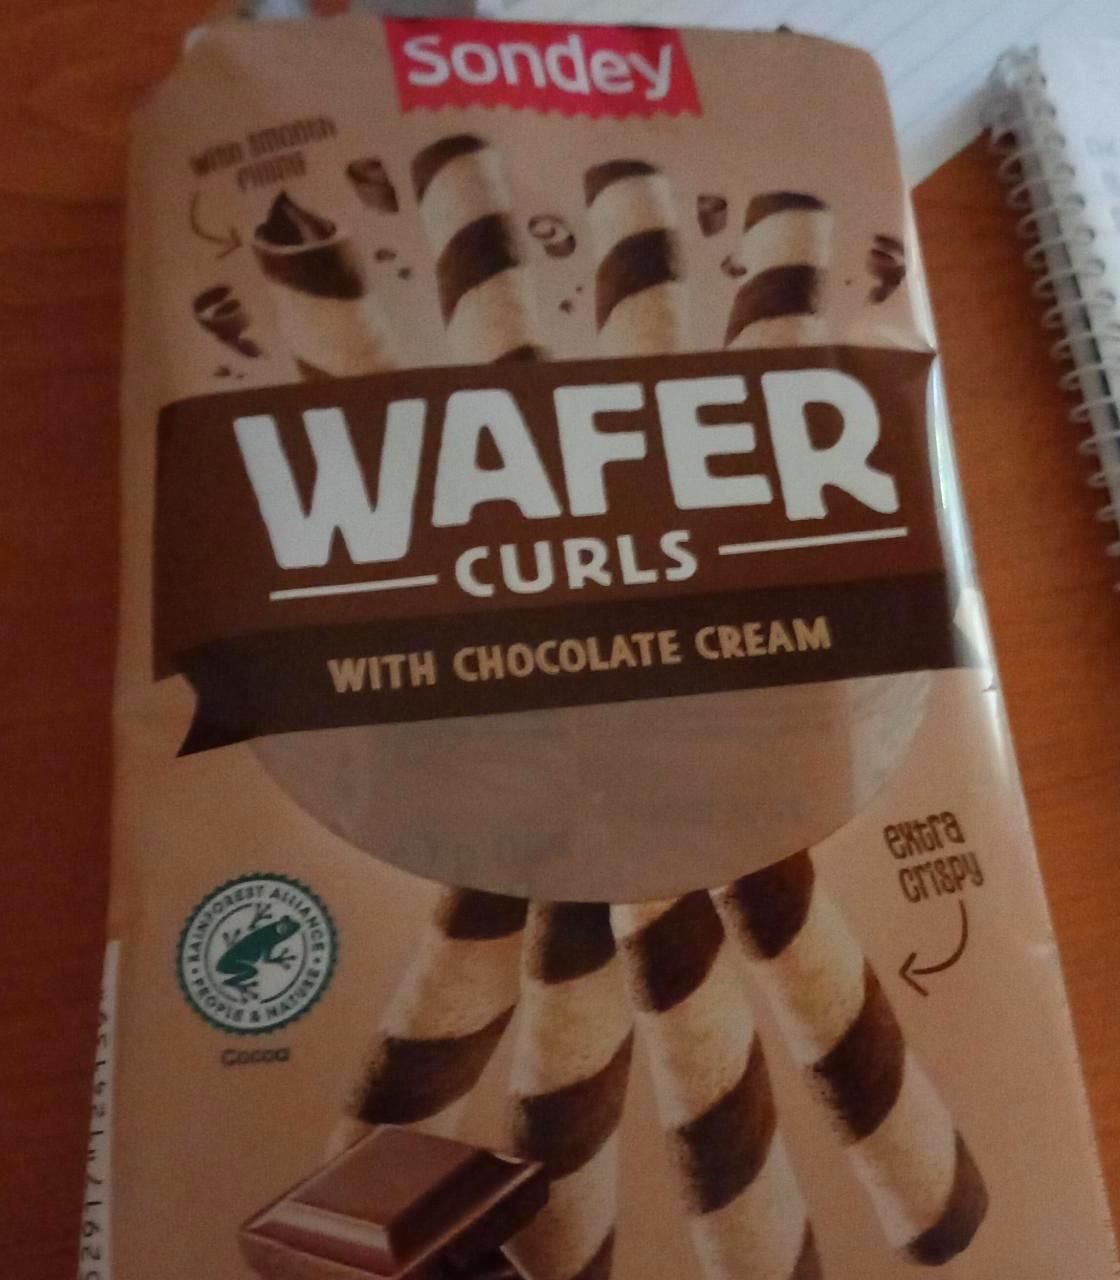 Képek - Wafer curls with chocolate cream Sondey